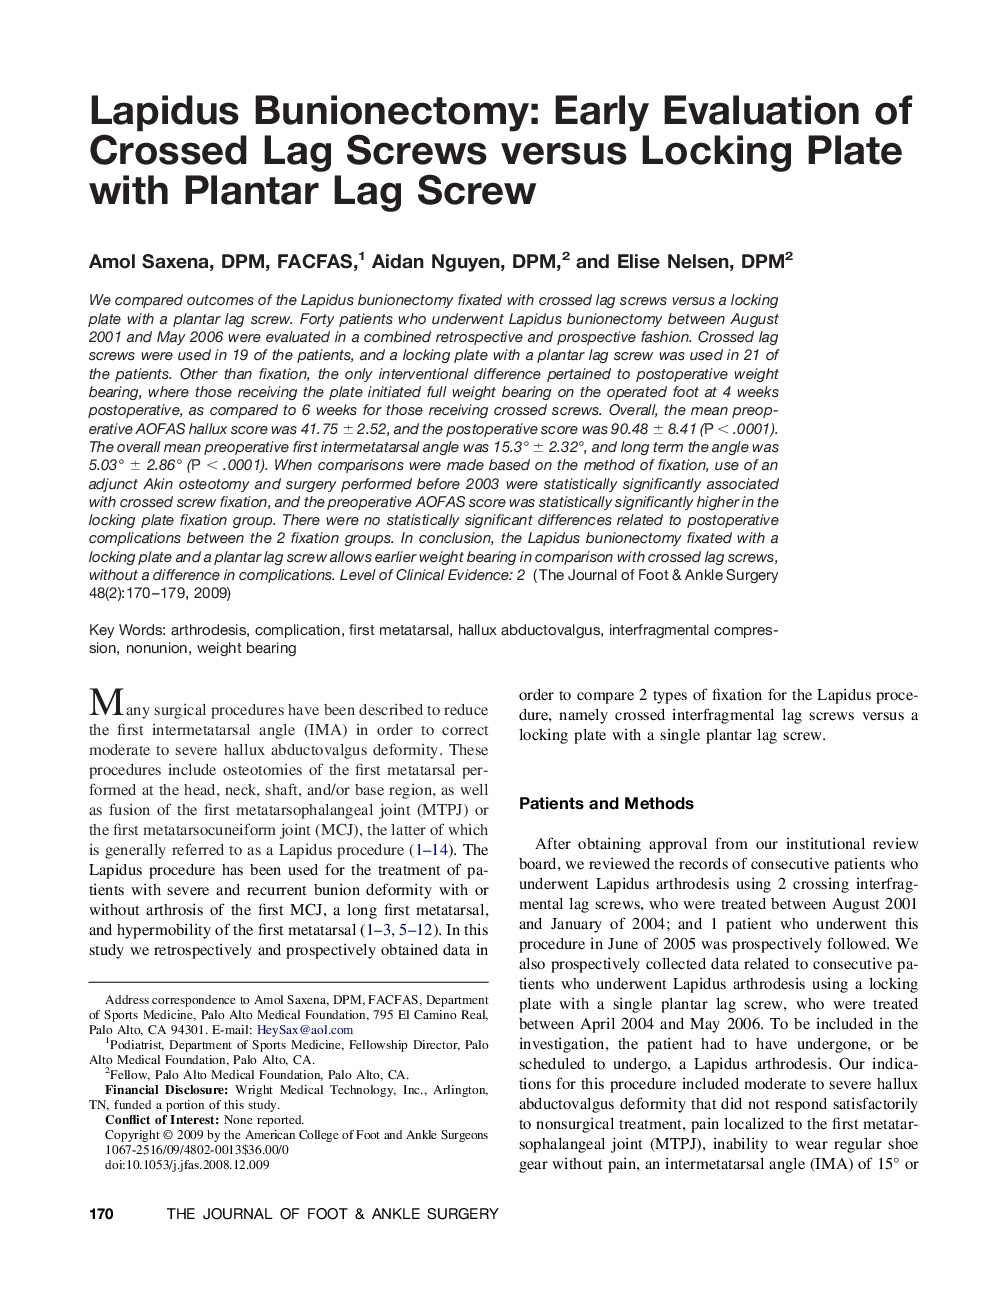 Lapidus Bunionectomy: Early Evaluation of Crossed Lag Screws versus Locking Plate with Plantar Lag Screw 